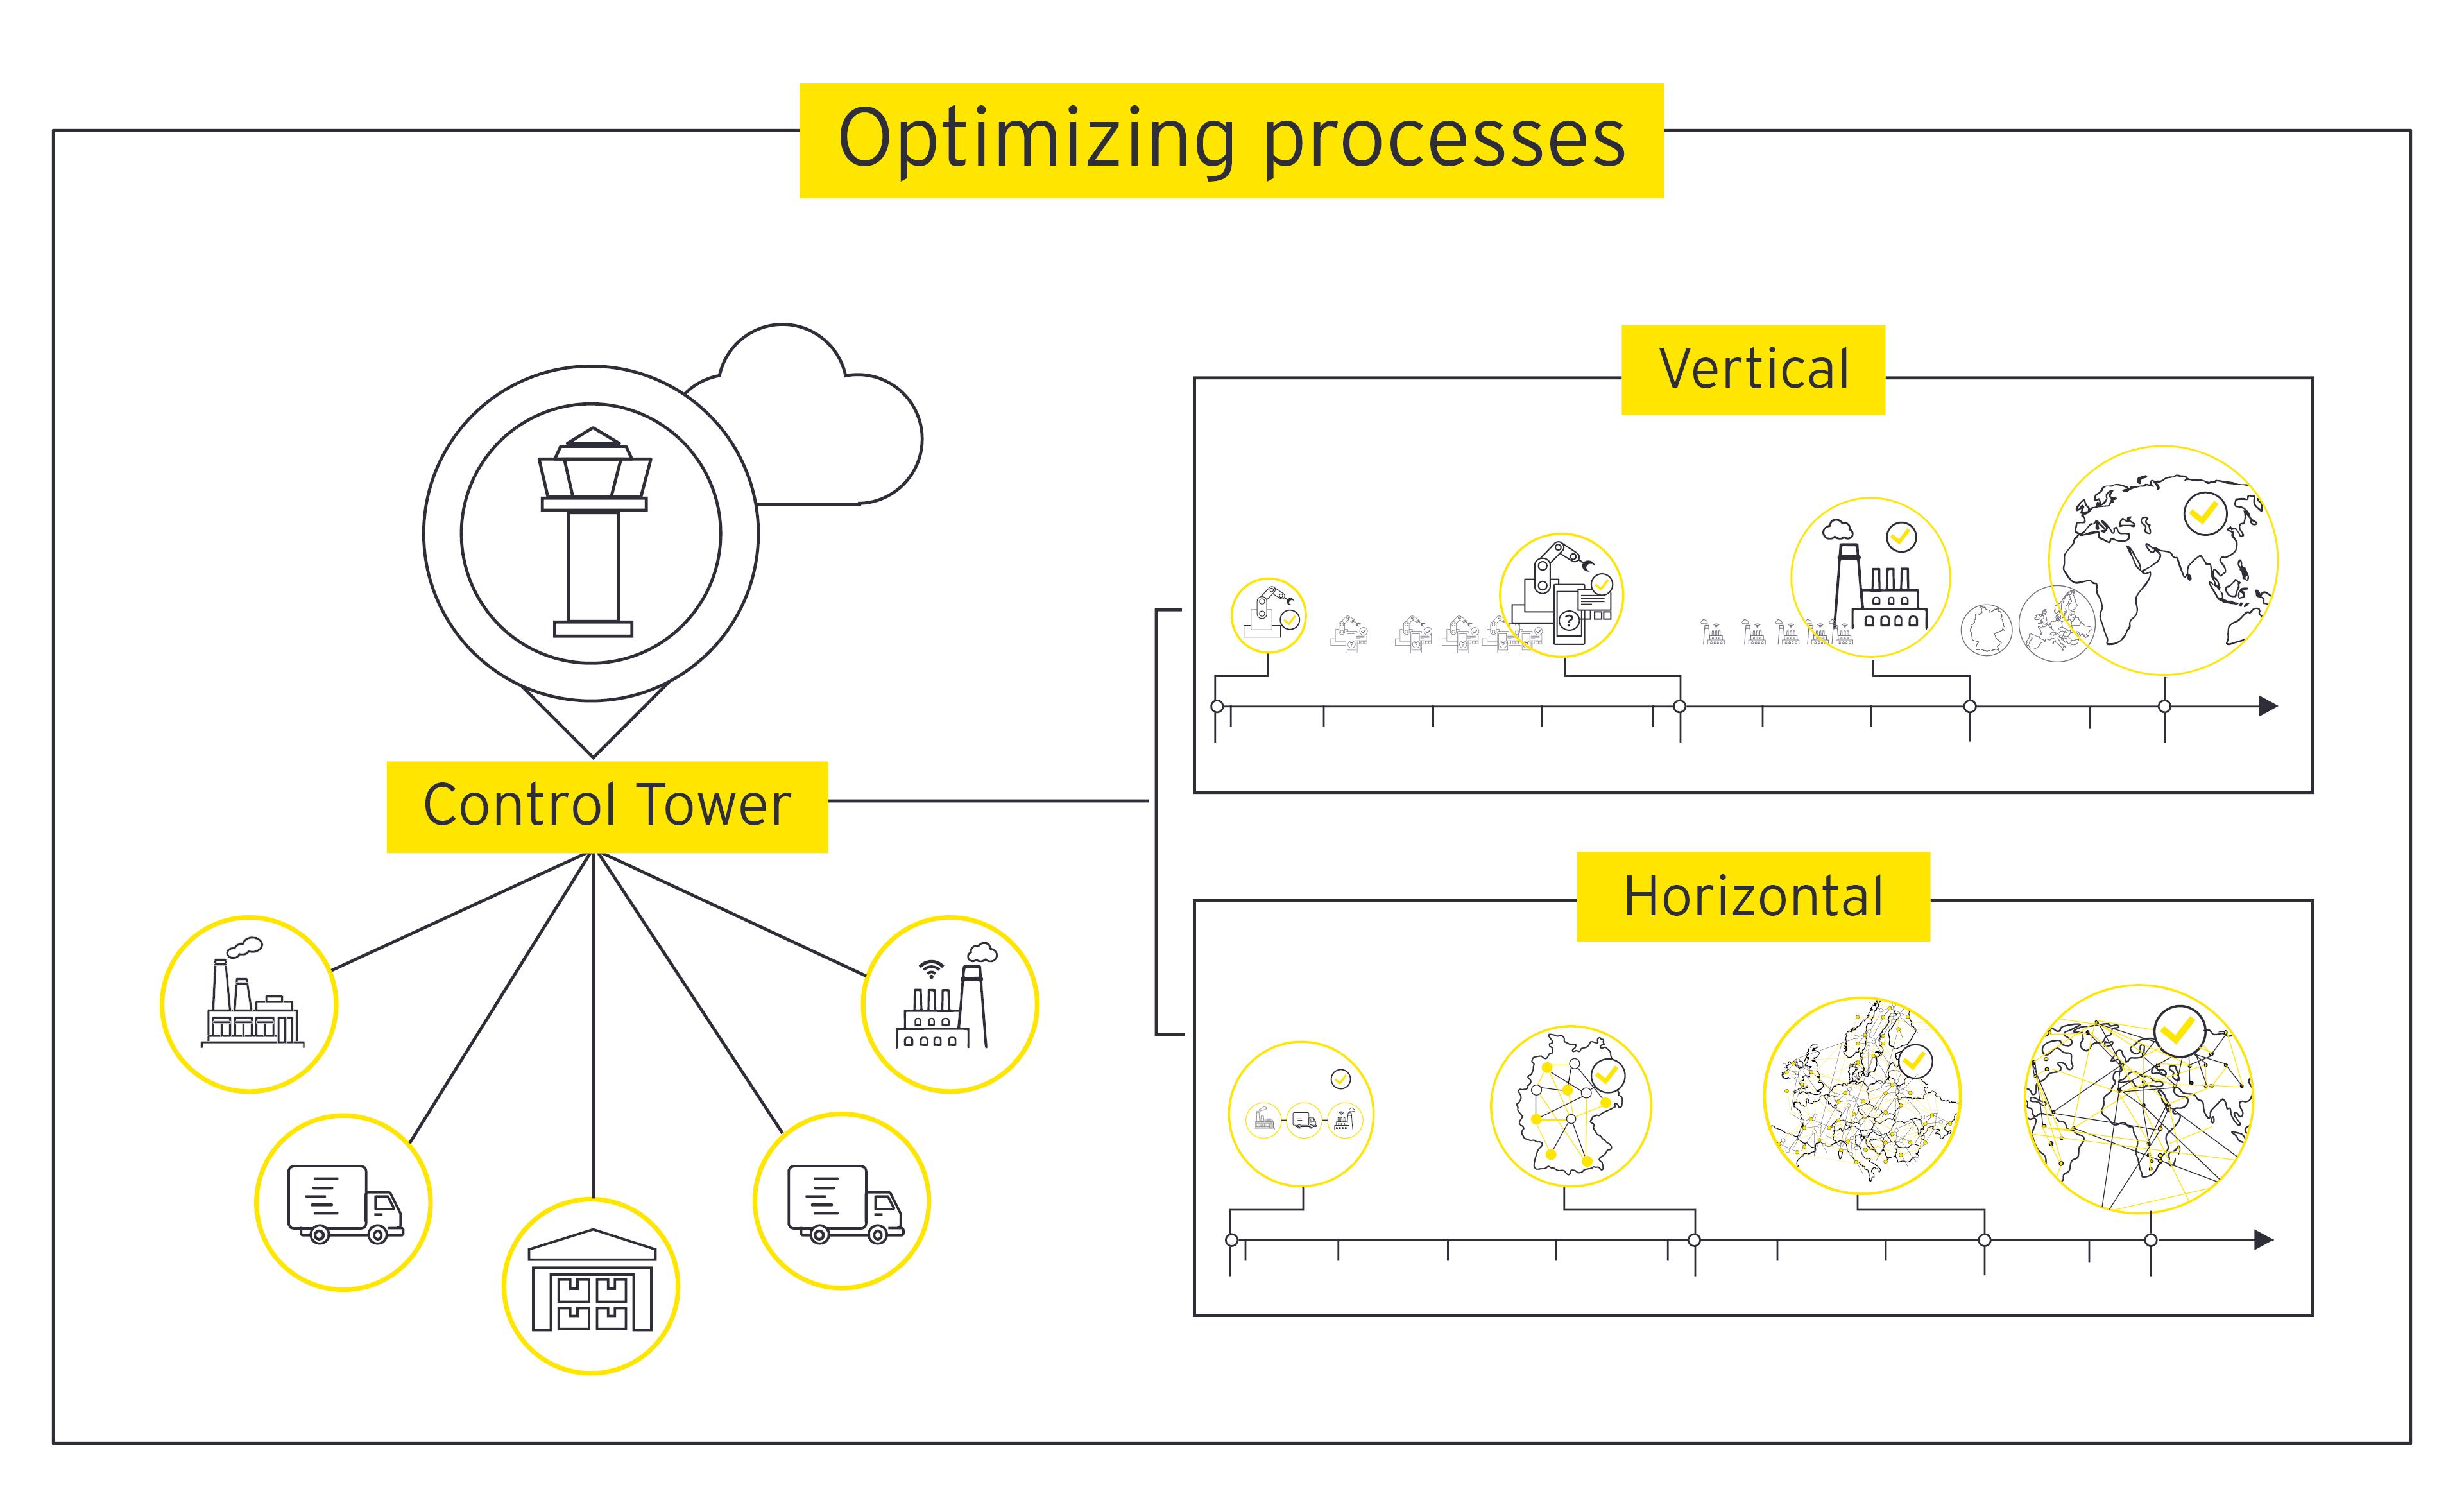 Optimizing processes